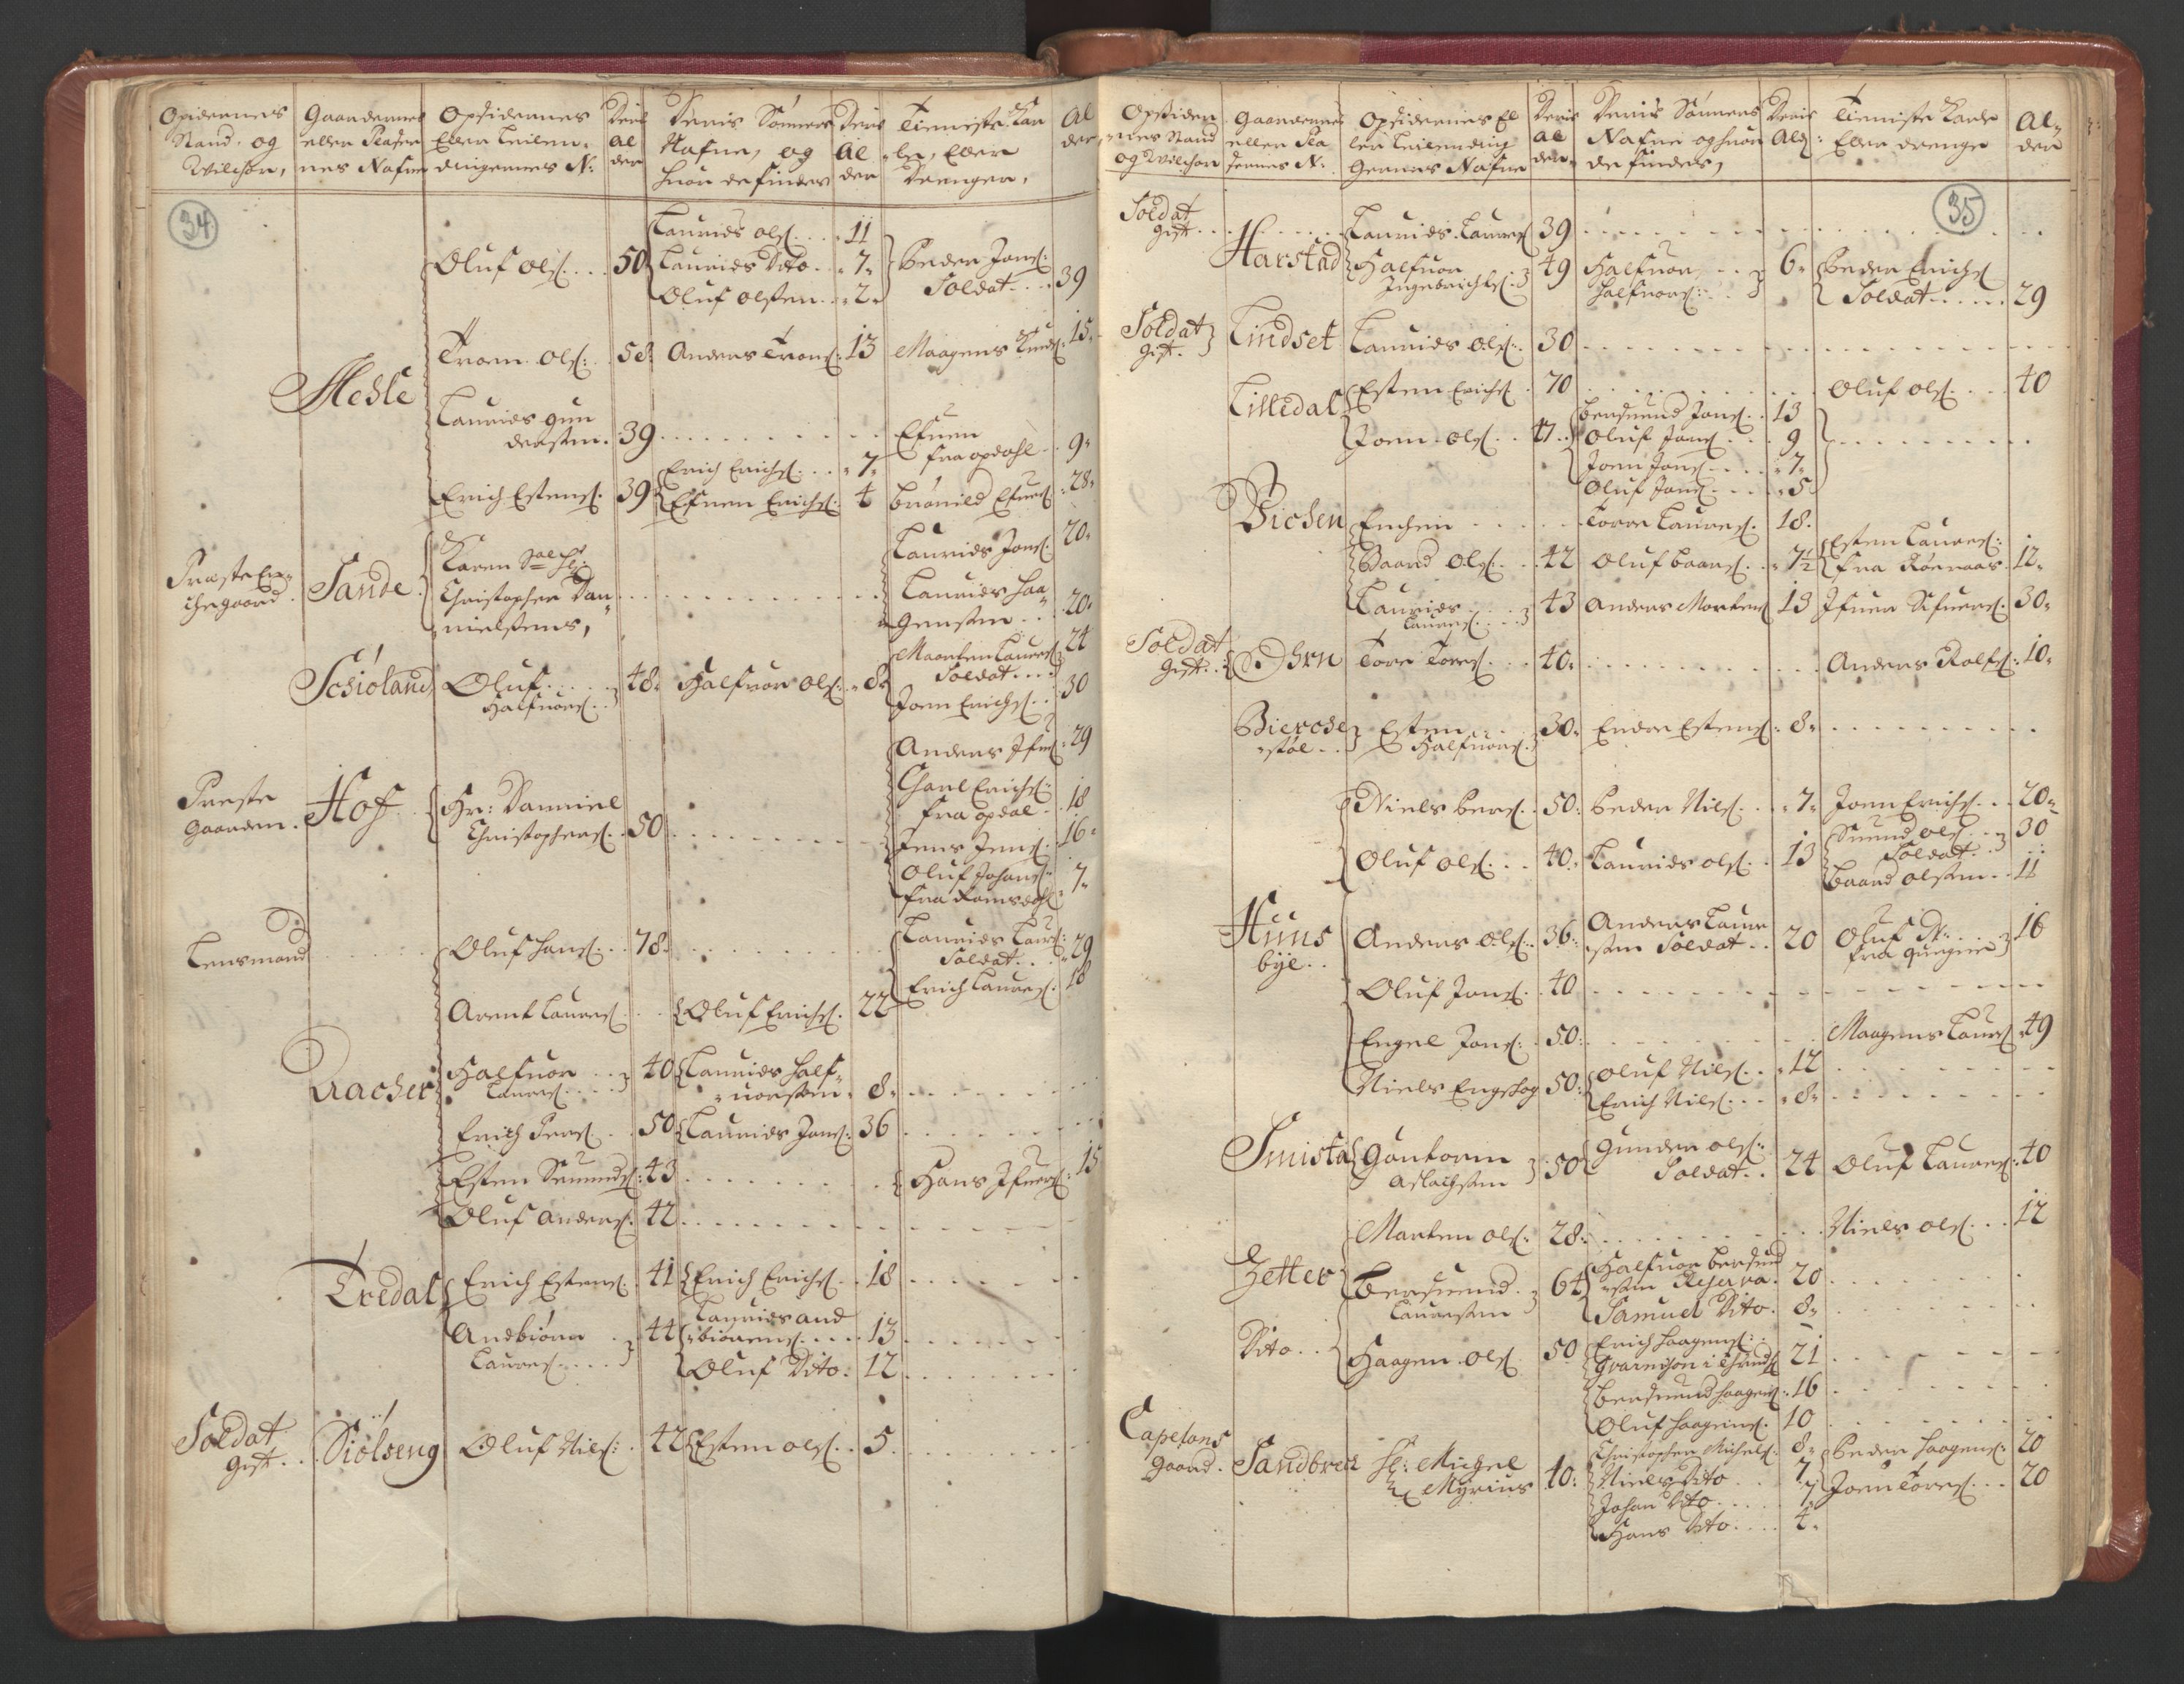 RA, Census (manntall) 1701, no. 11: Nordmøre fogderi and Romsdal fogderi, 1701, p. 34-35